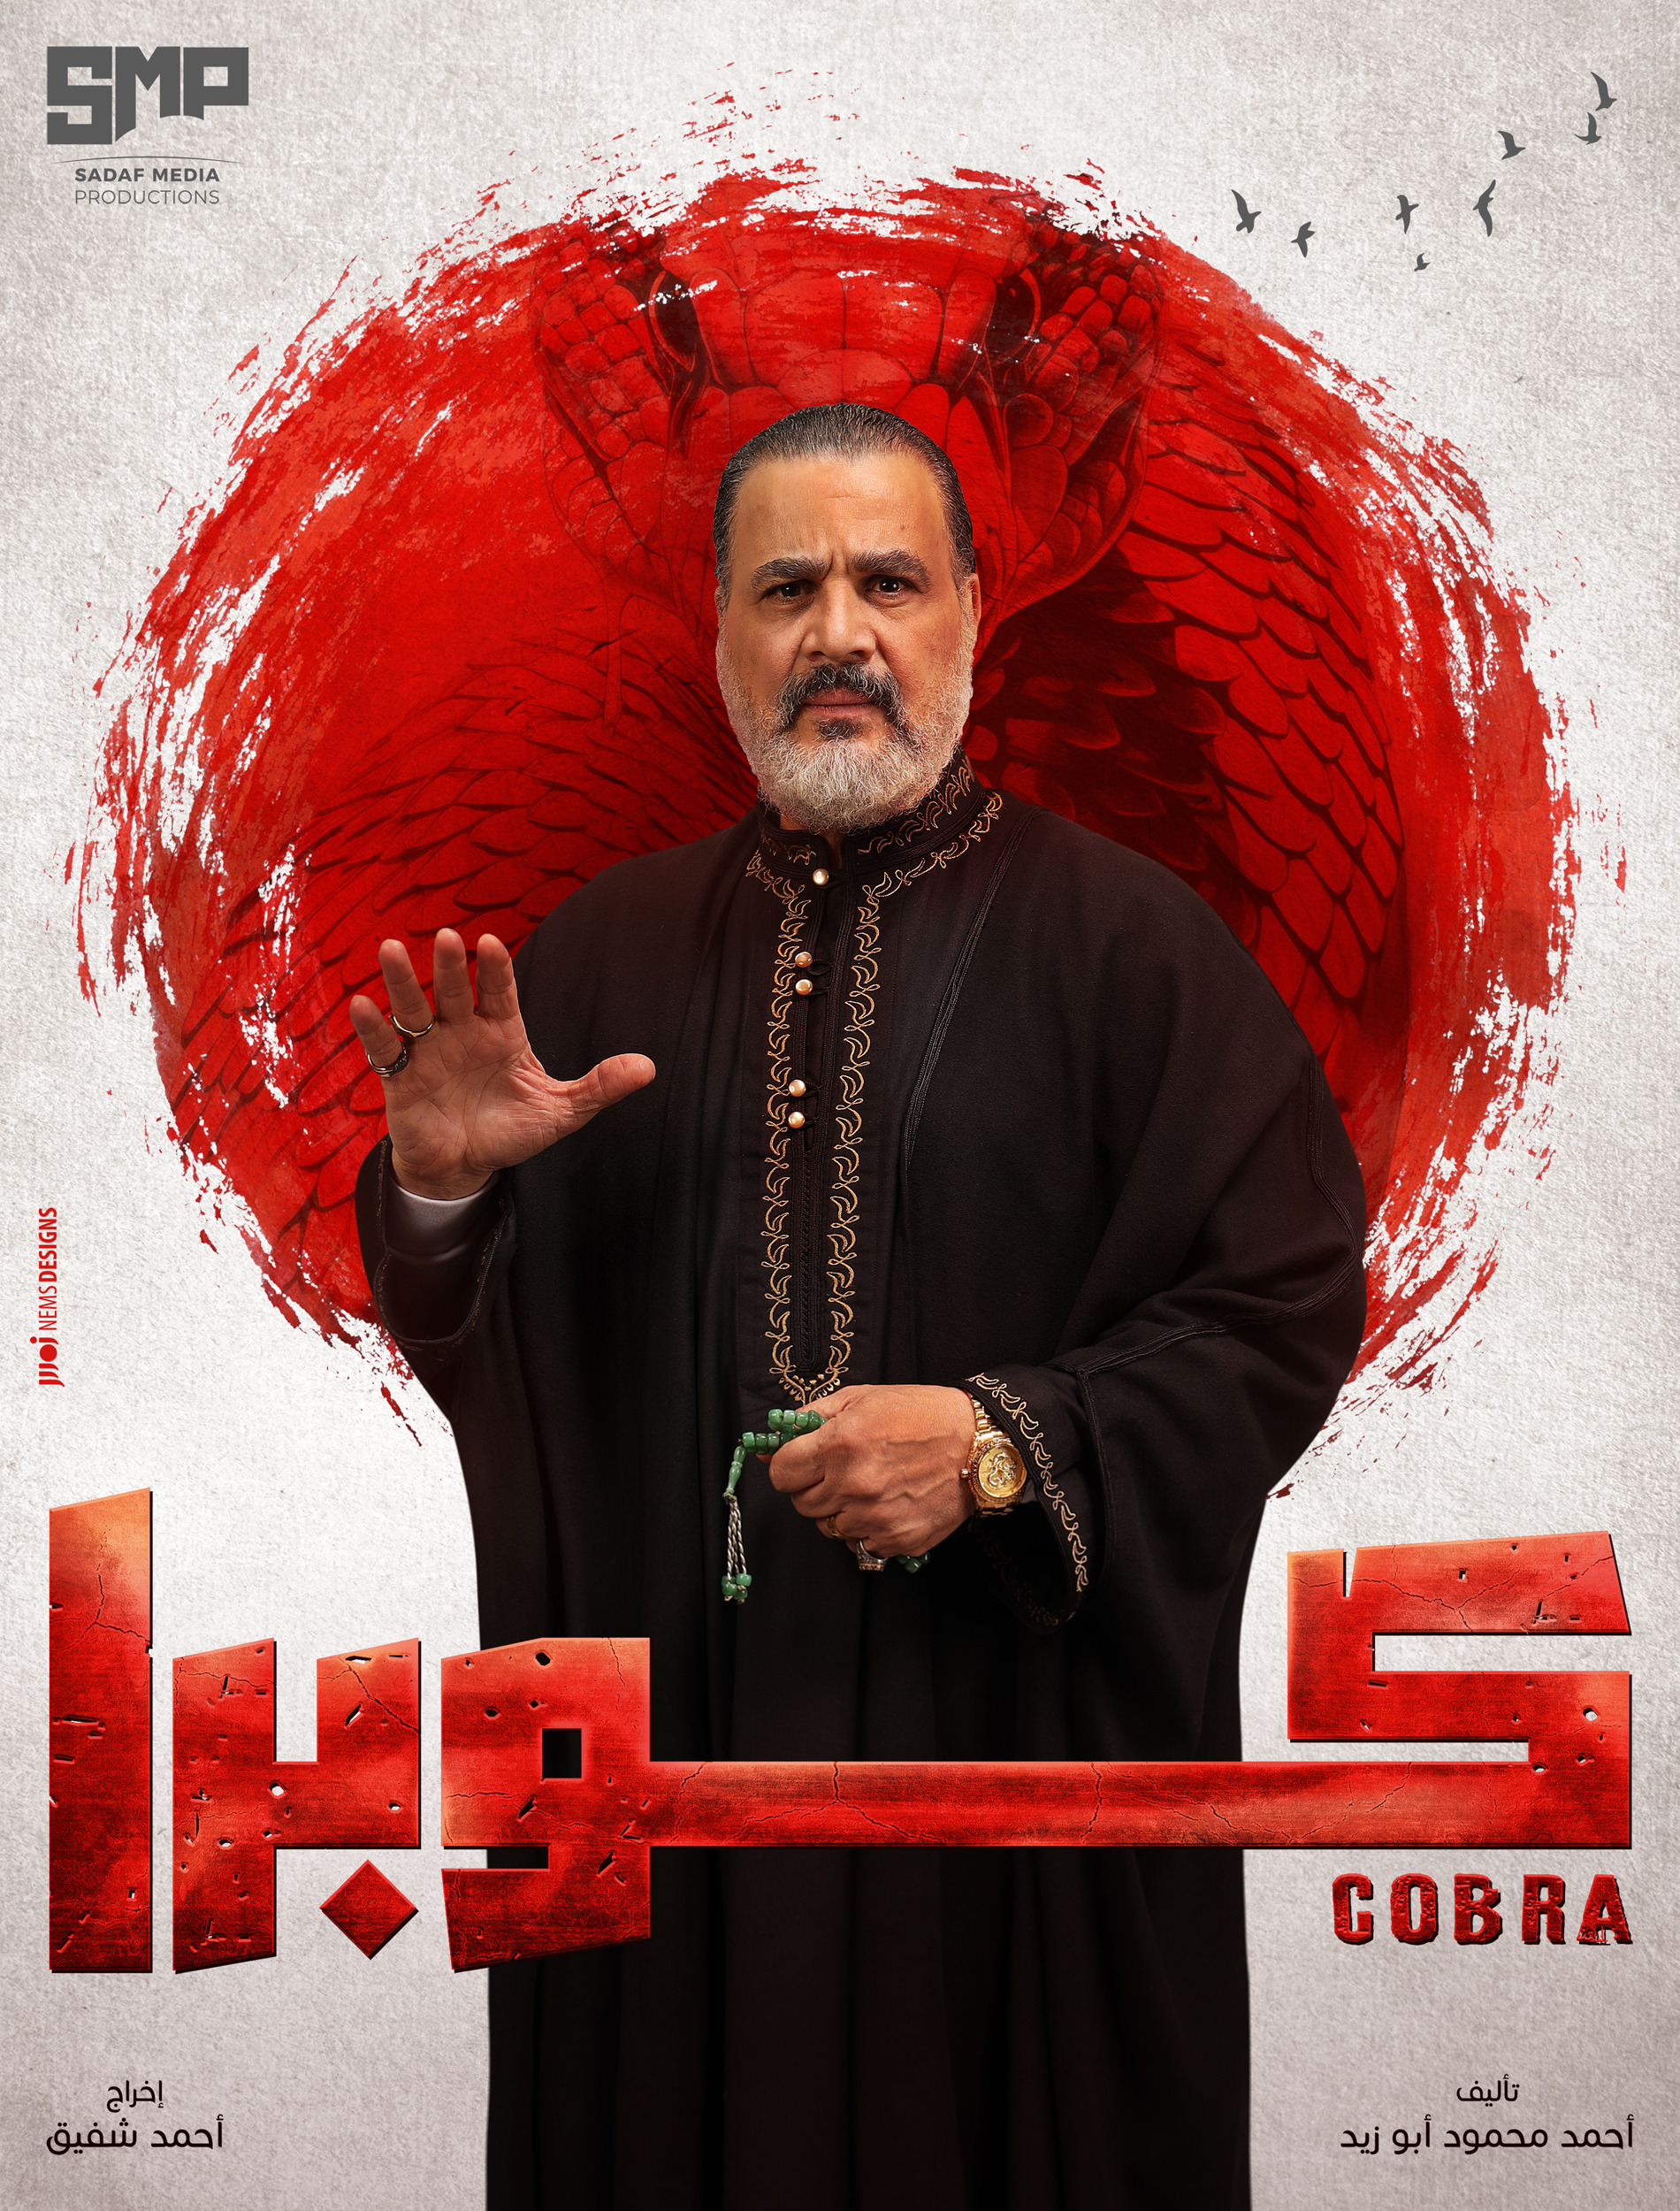 Mega Sized TV Poster Image for Cobra (#13 of 20)